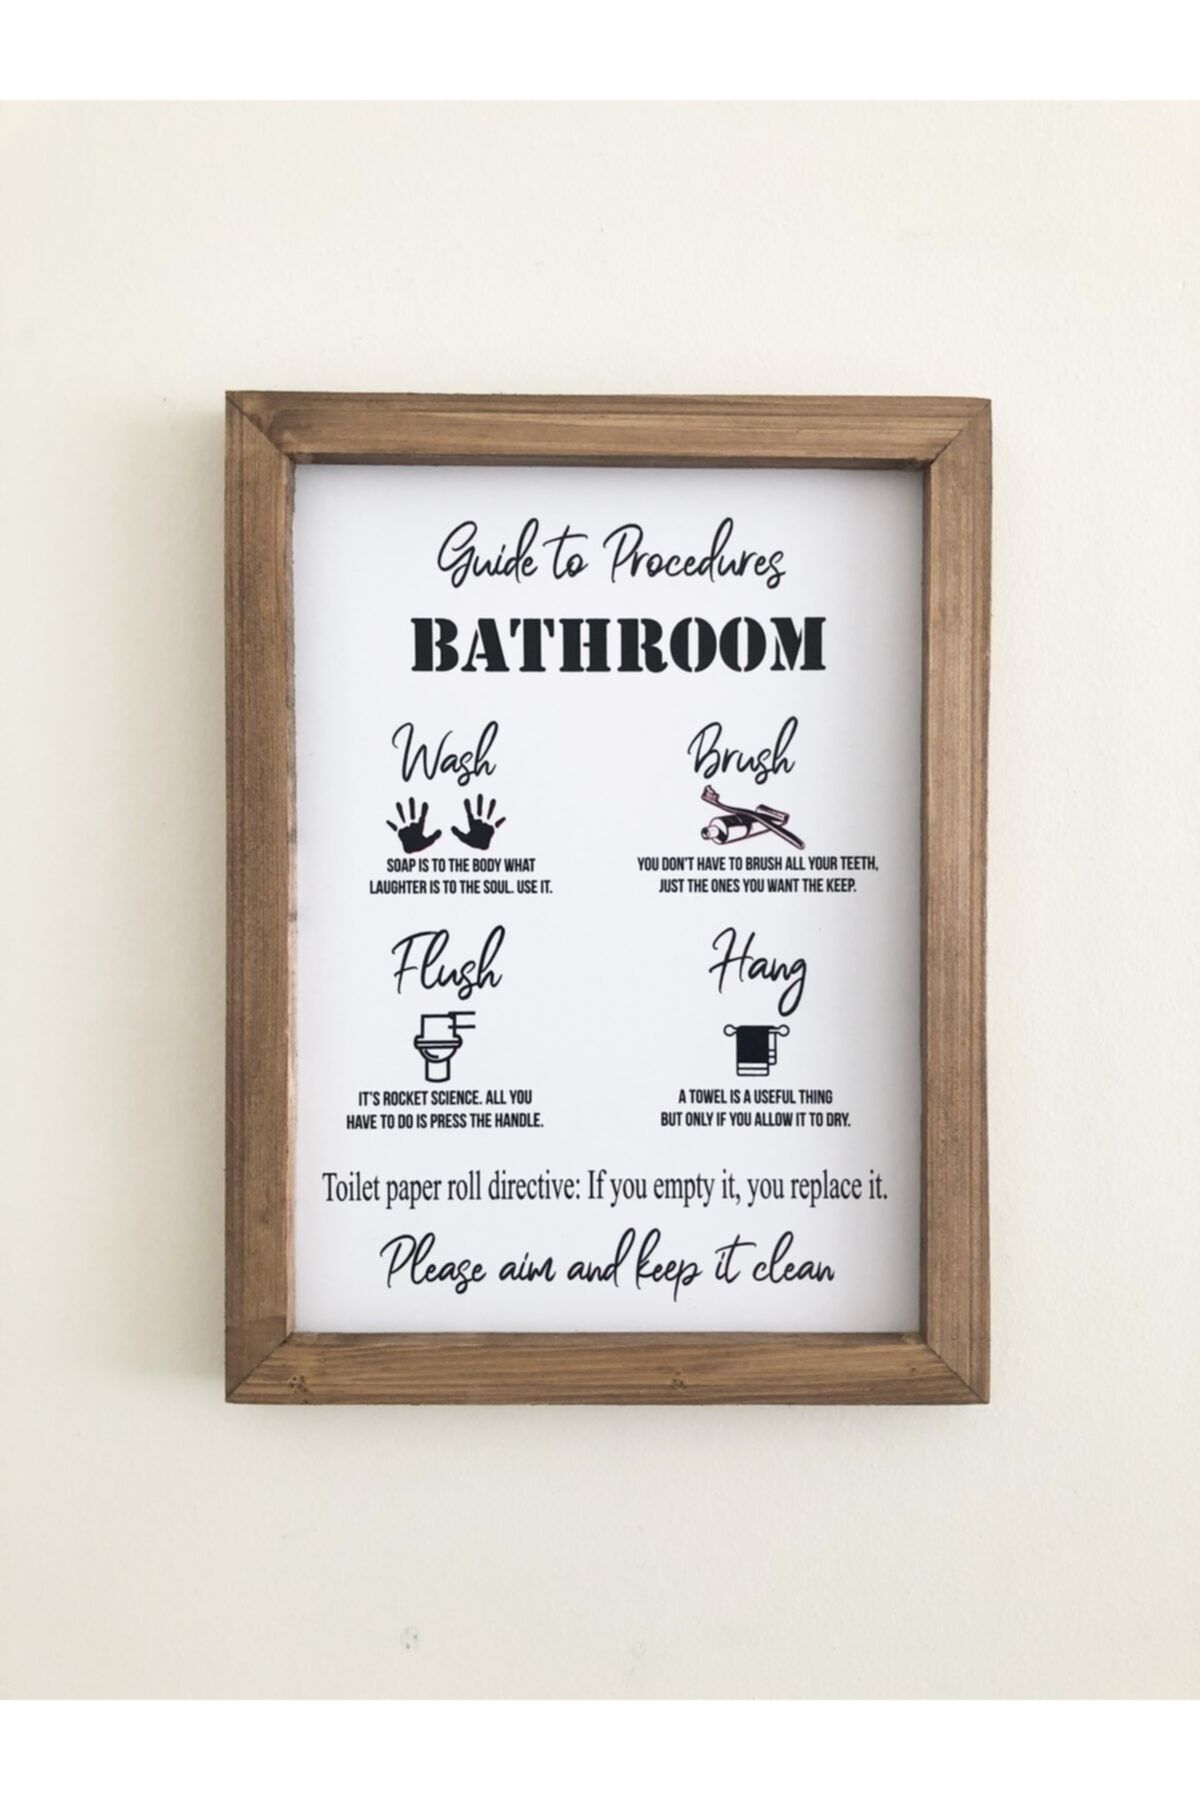 Puu Design Banyo Prosedürü Bathroom Guide To Procedures Ahşap Çerçeve